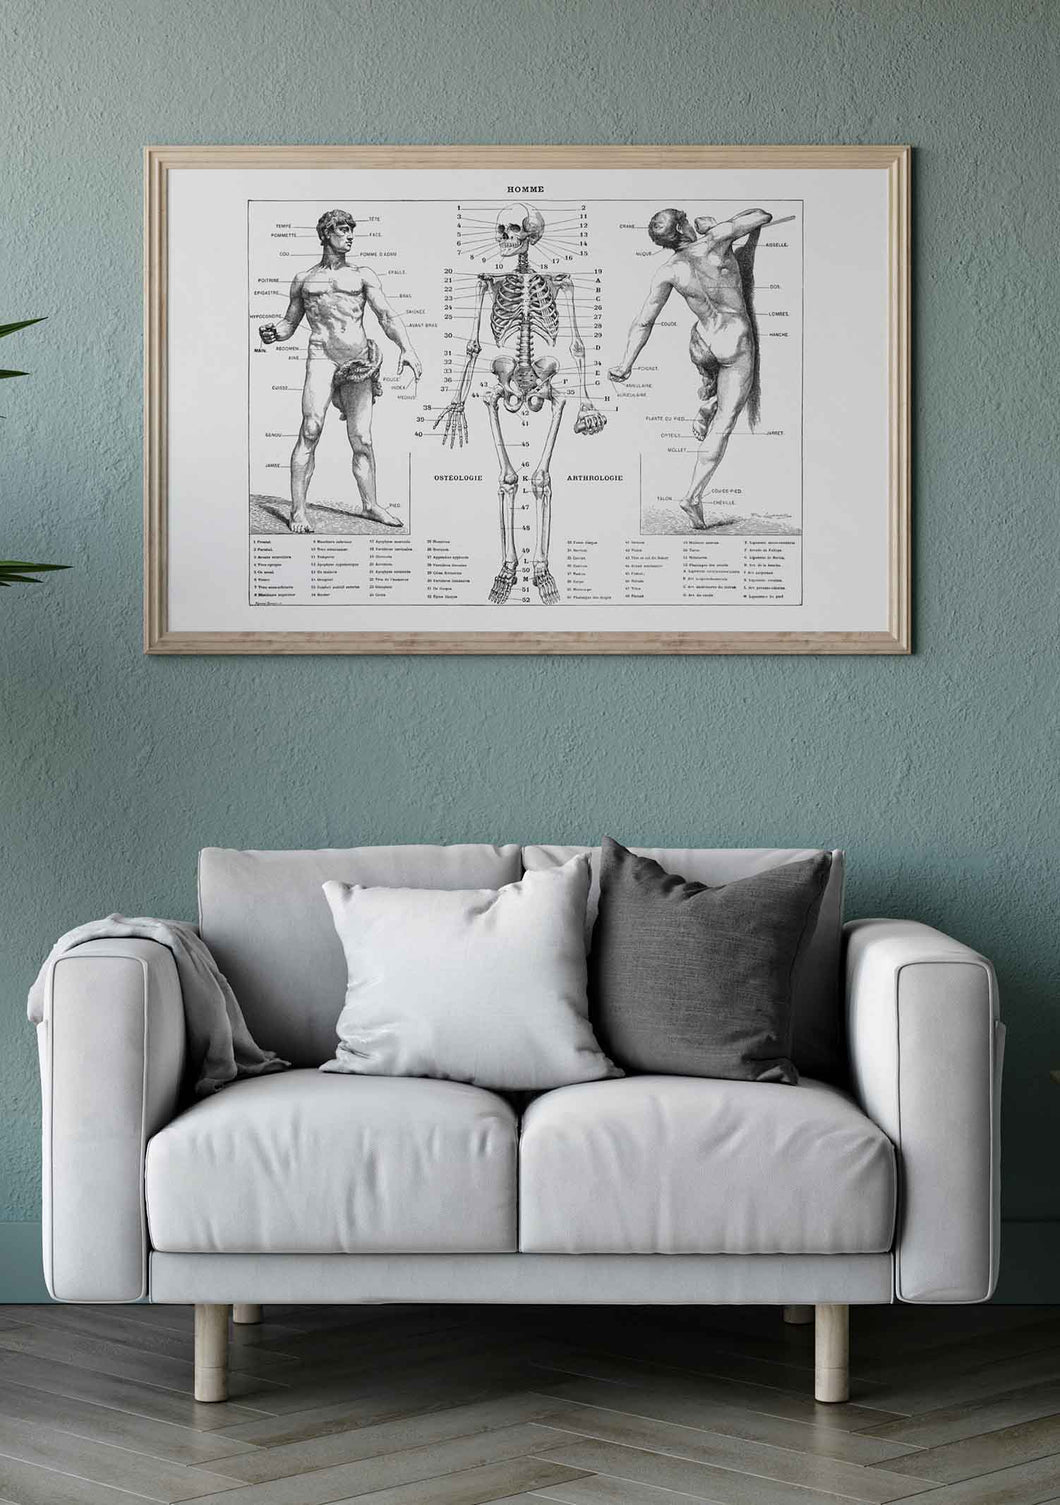 Anatomía Hombre Clásica